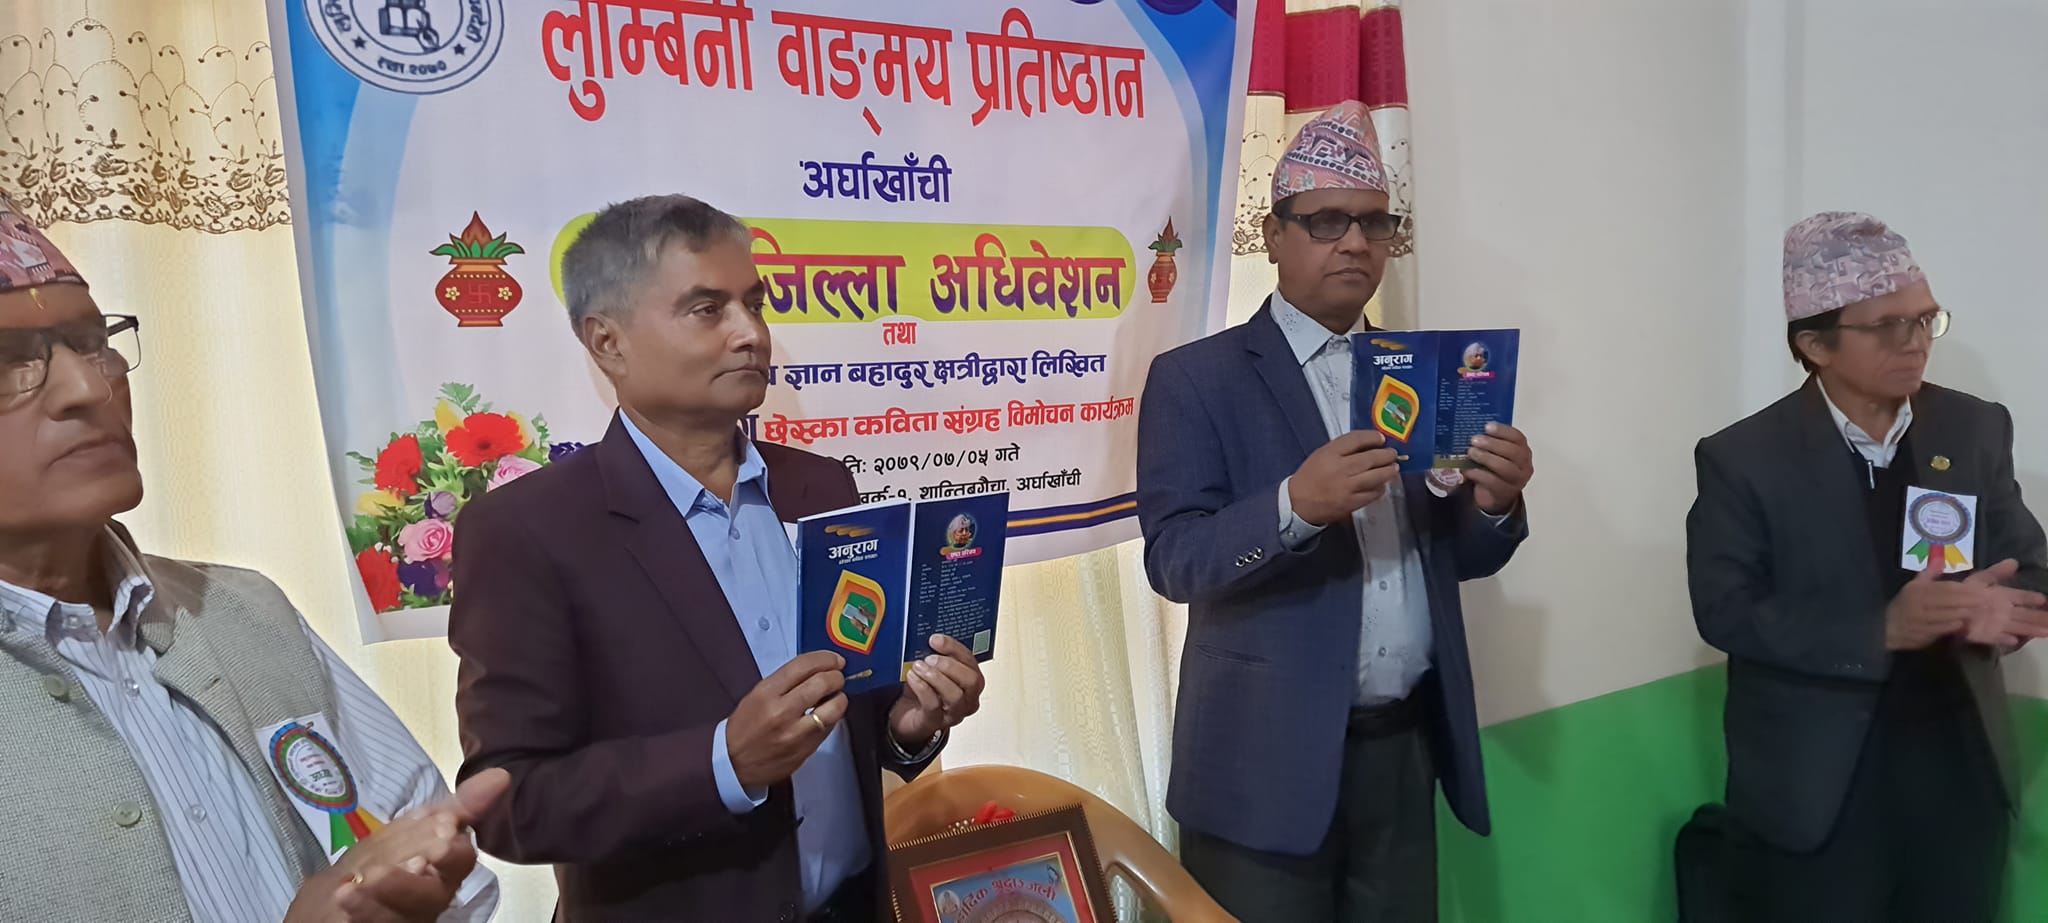 लुम्बिनी वाङमय प्रतिष्ठान अर्घाखाँचीको अधिवेशन, अध्यक्षमा बस्याल